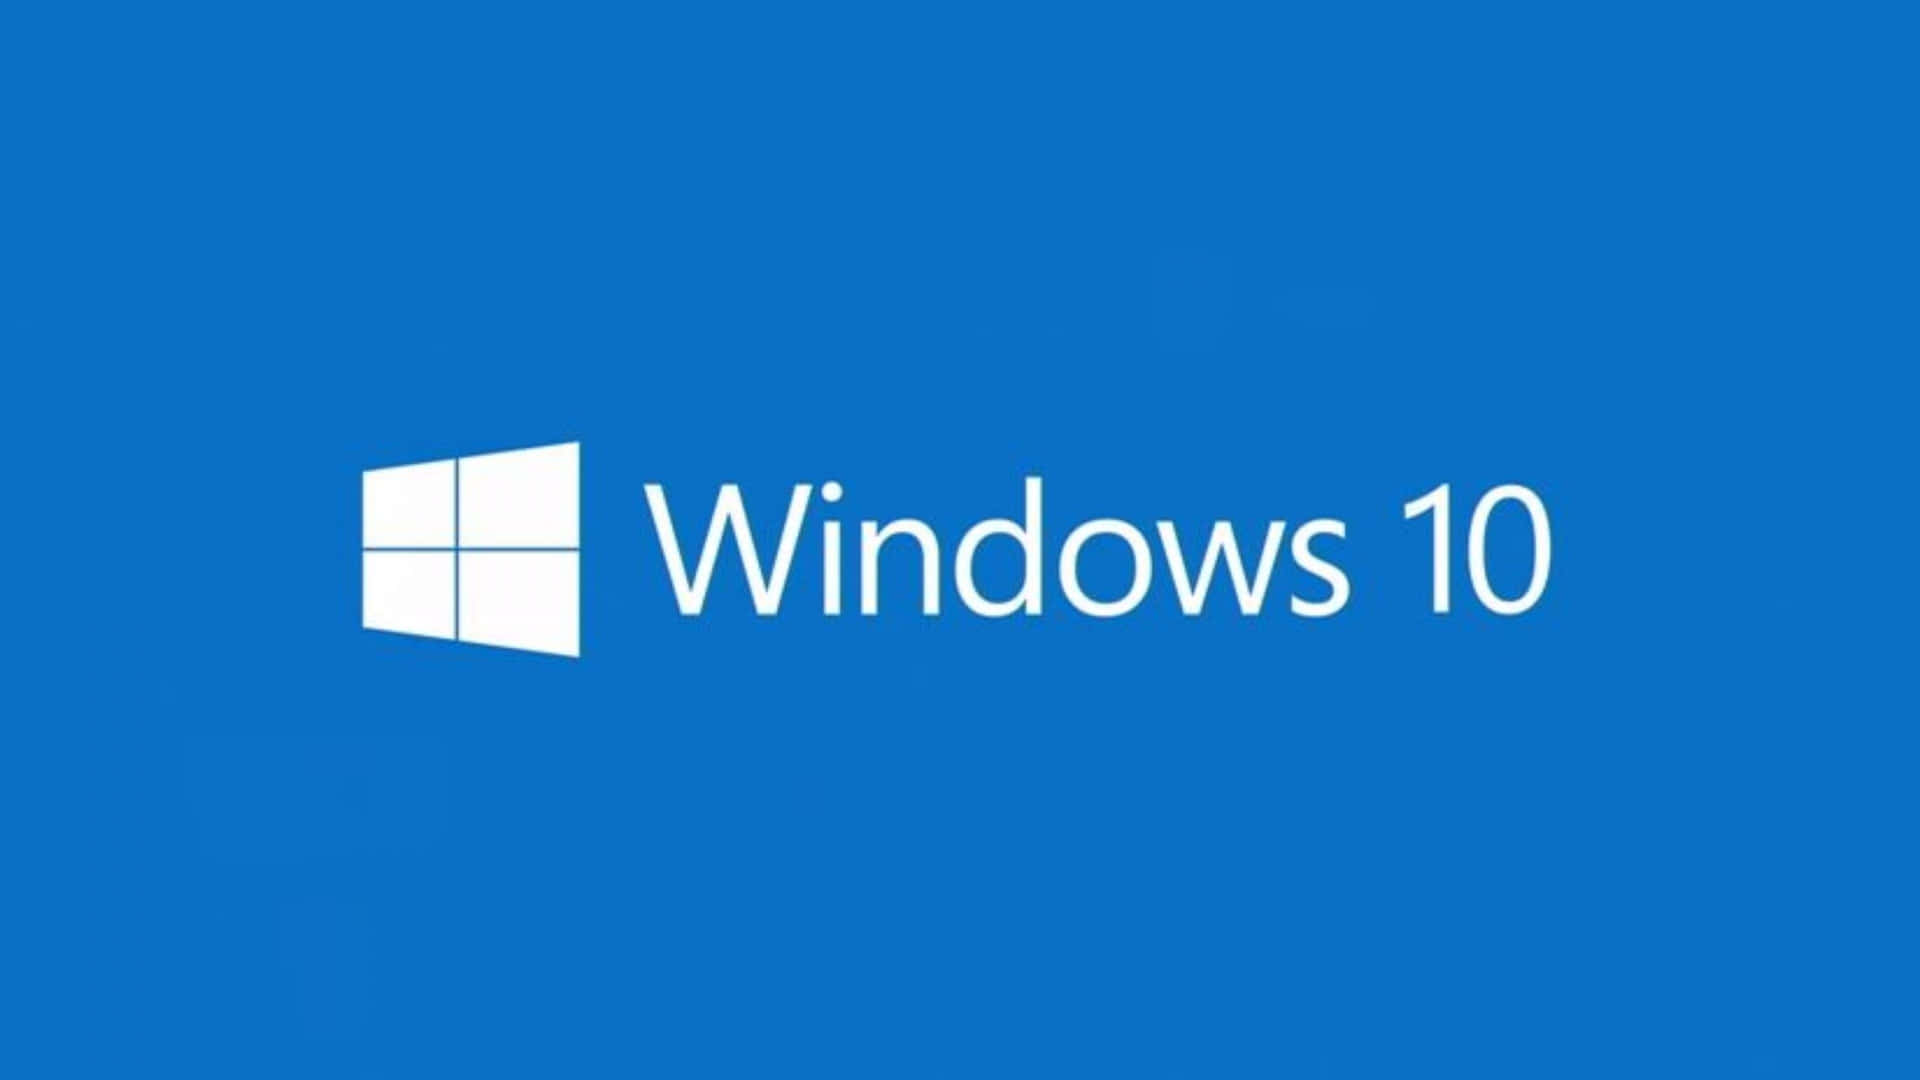 Windows 10 Desktop, Enhanced By Years of Experience